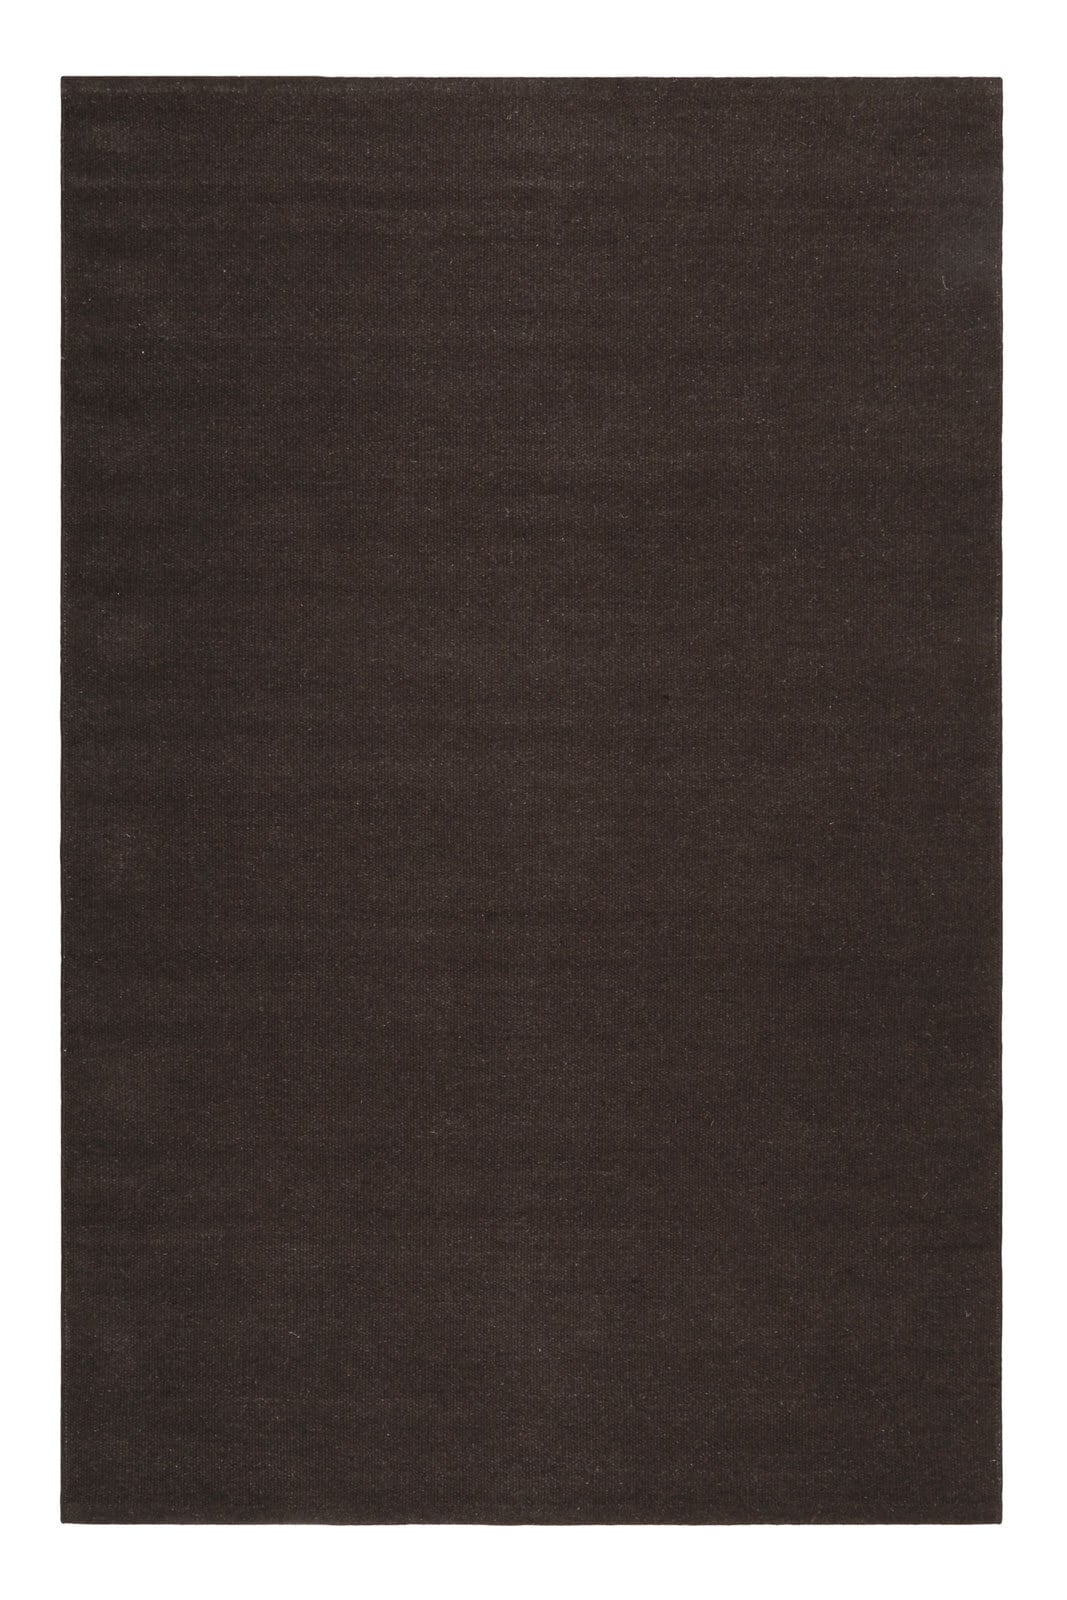 ESPRIT Kelim-Teppich MAYA 130 x 190 cm braun